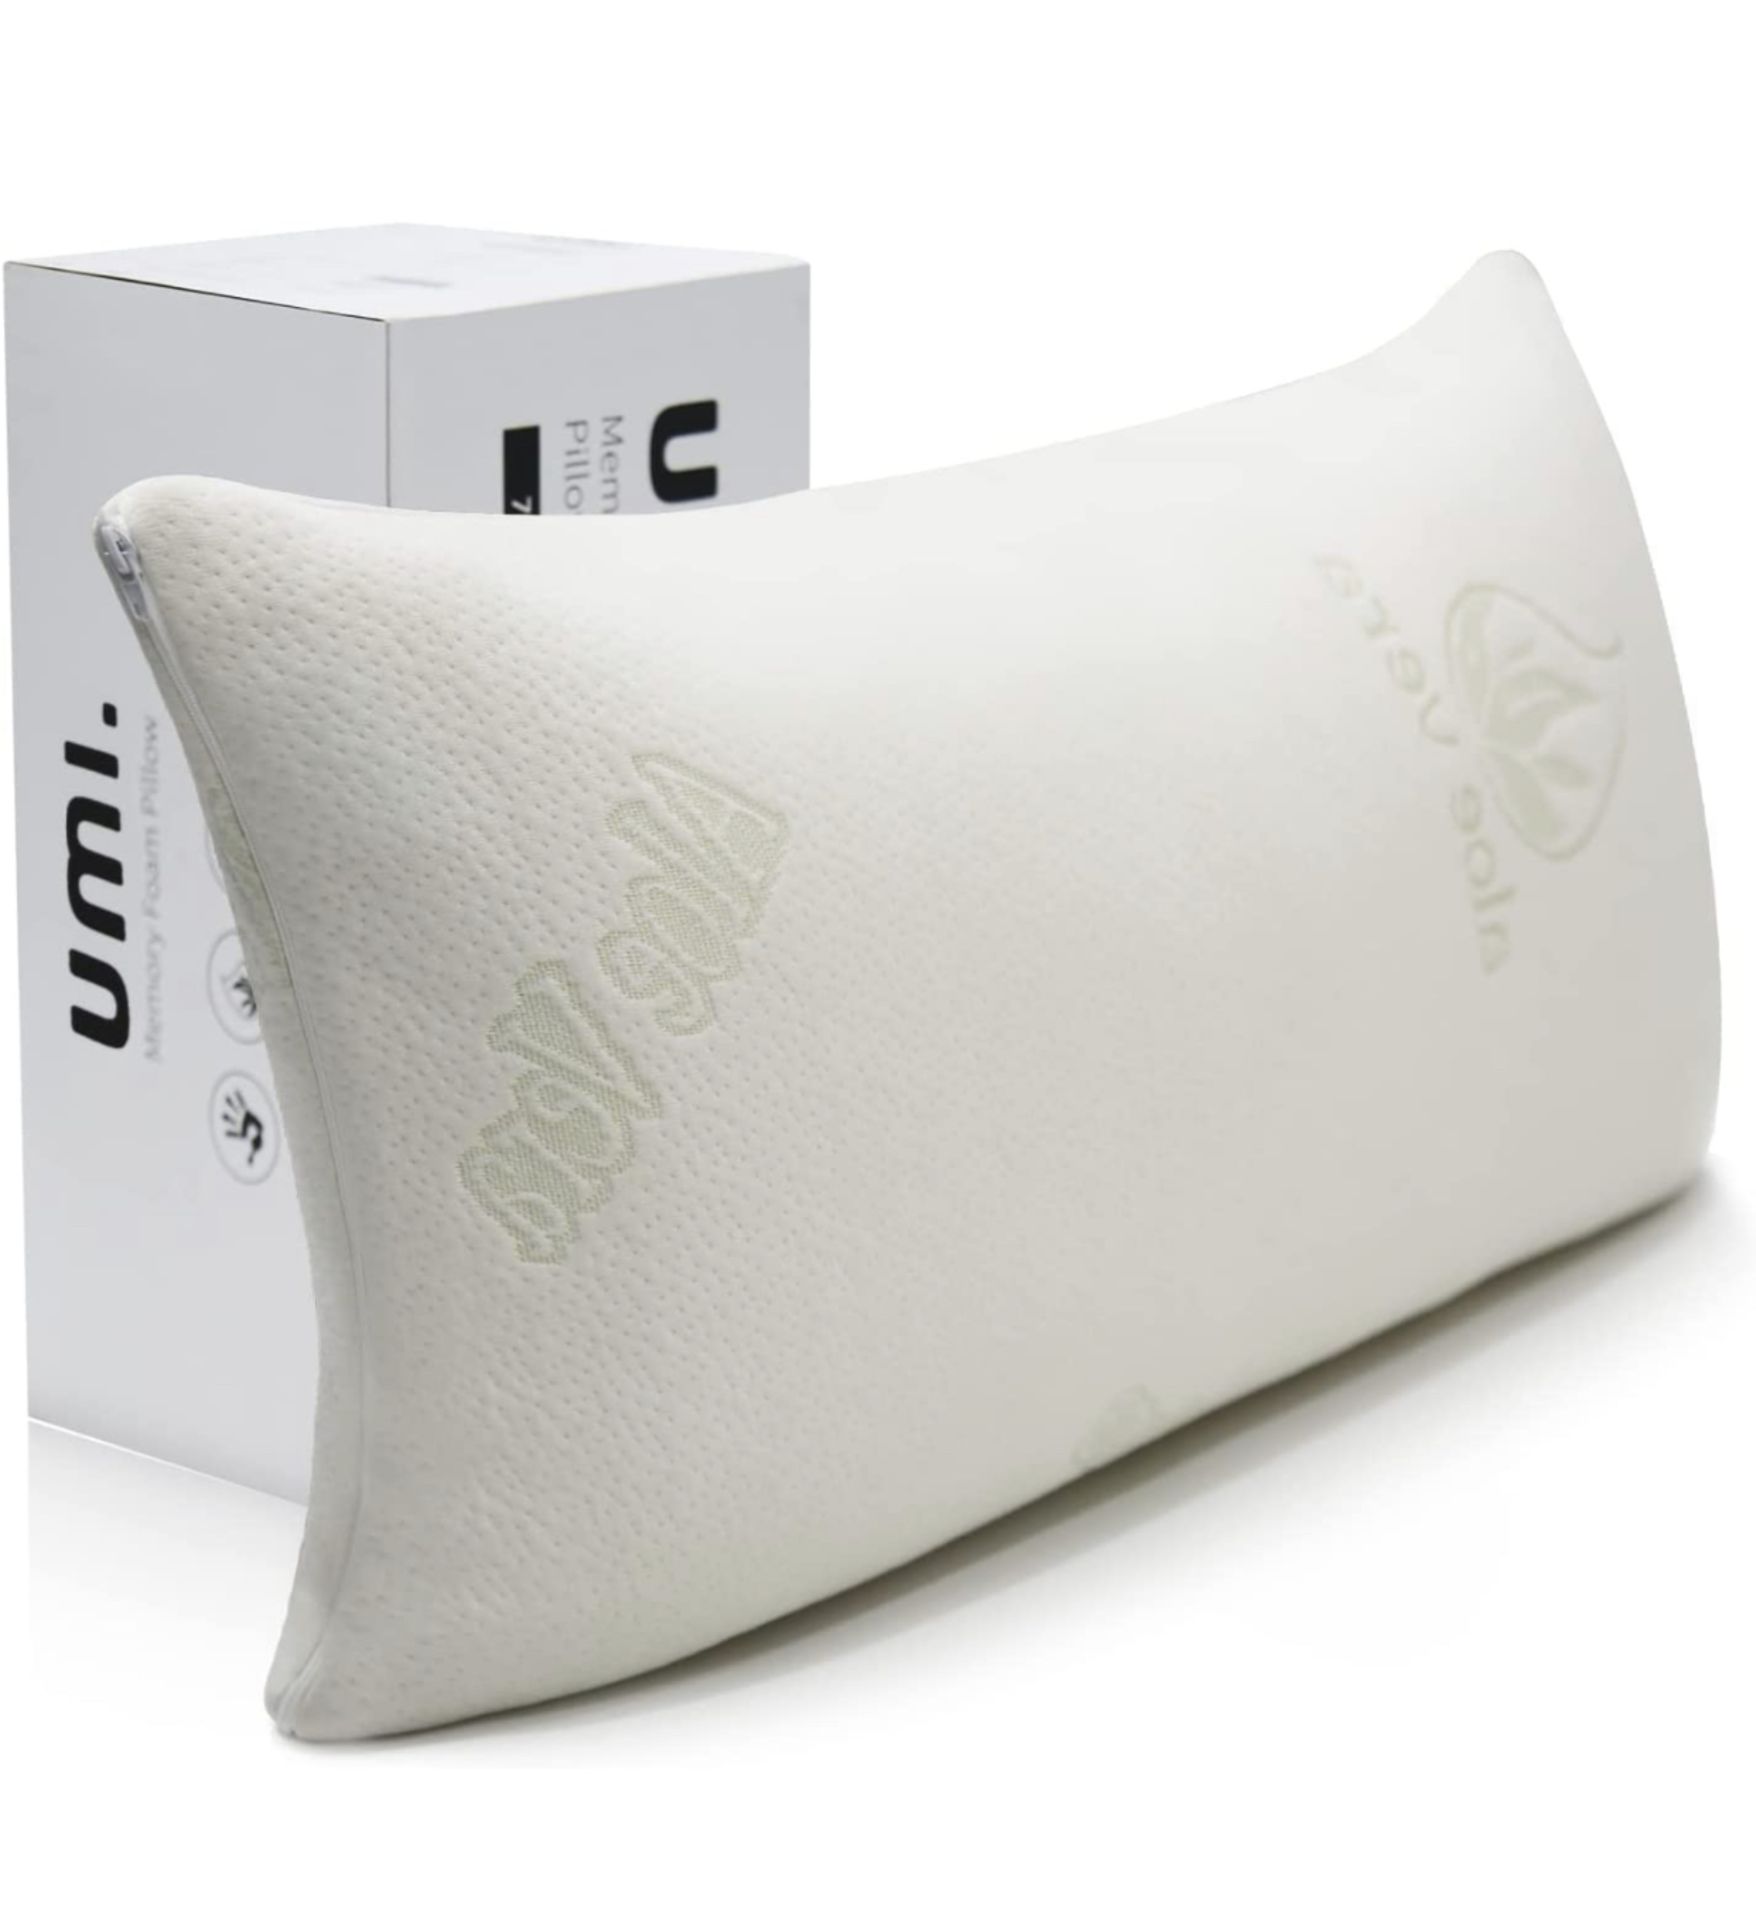 Umi Memory Foam Pillow Orthopedic with Aloe Vera Cover RRP £39.99